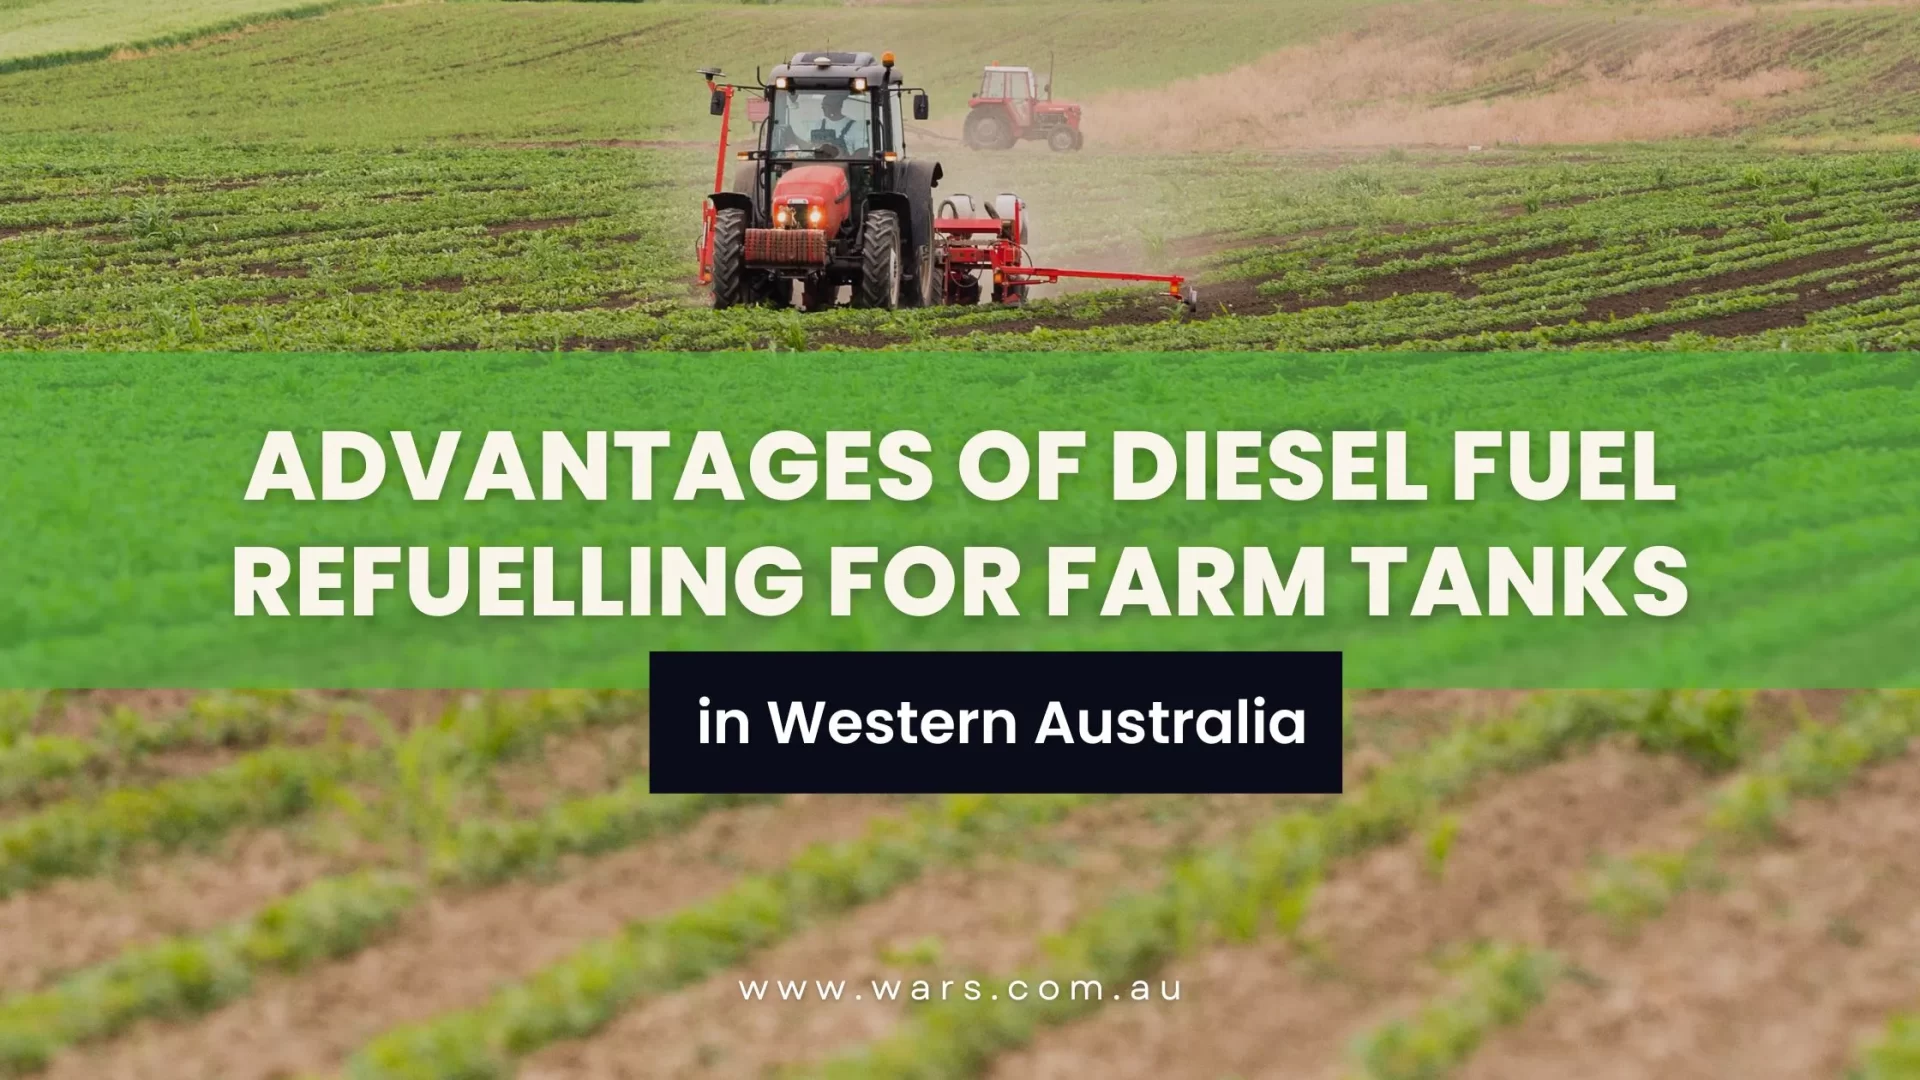 Advantages of Diesel Fuel Refueling for Farm Tanks in Western Australia